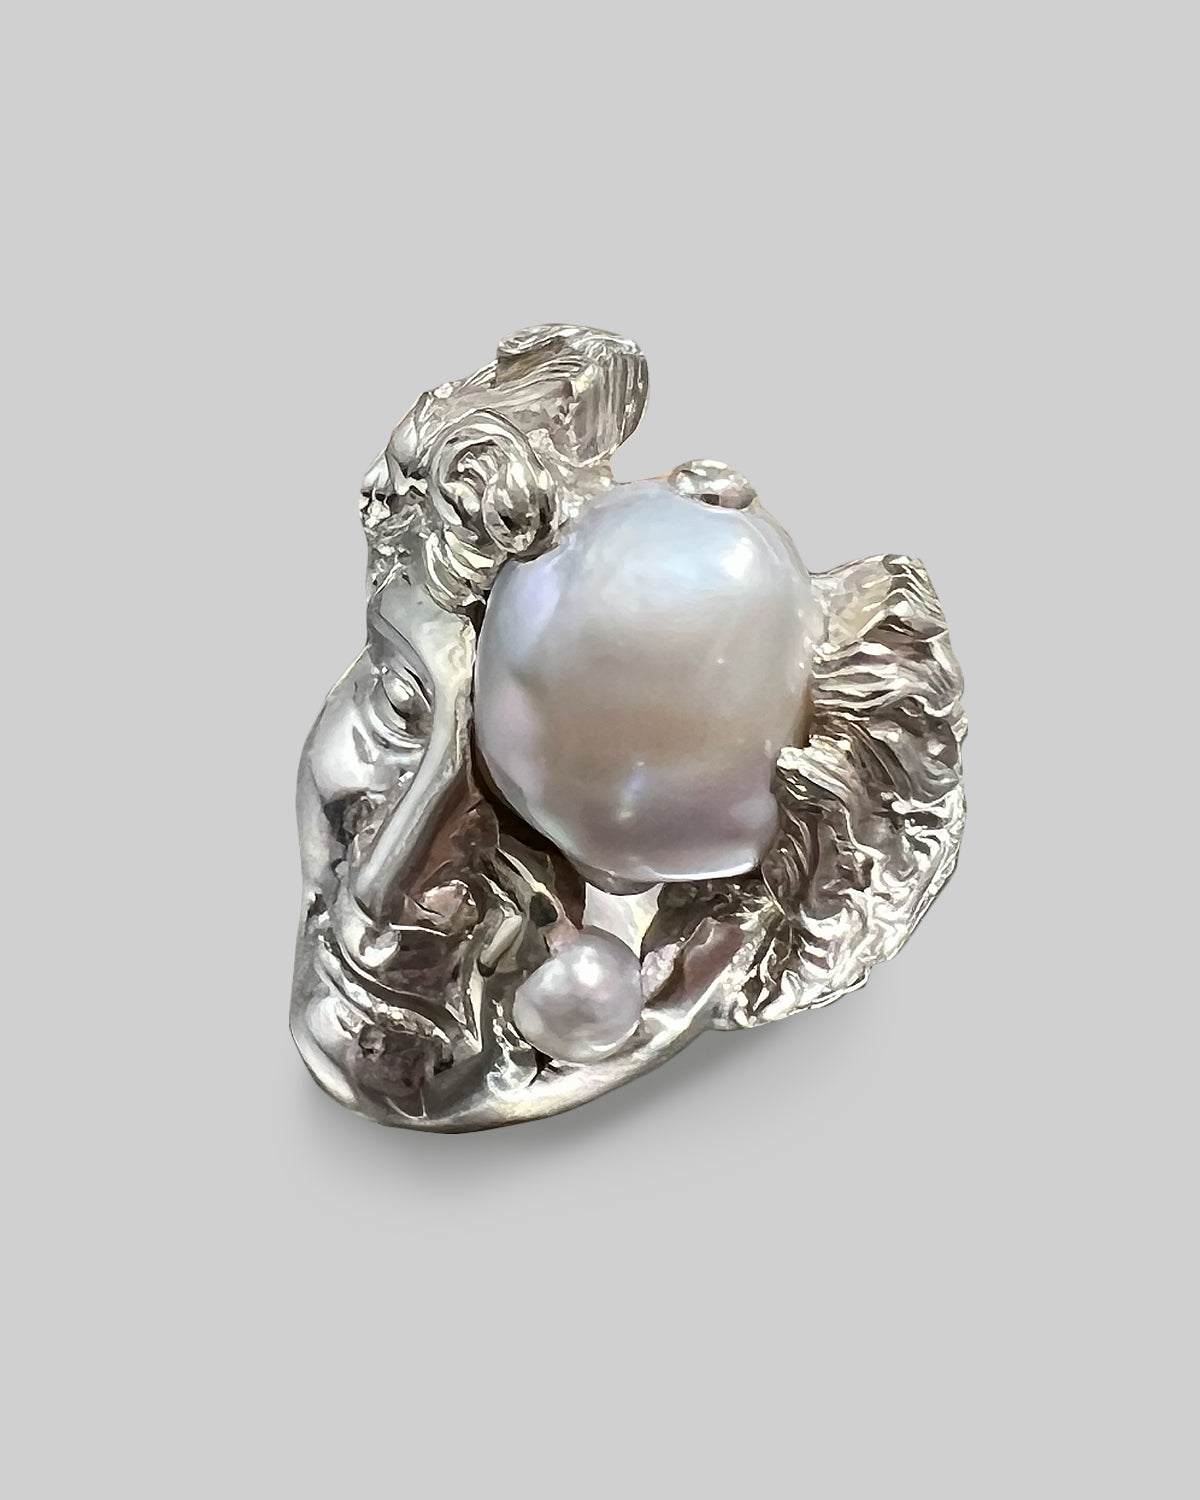 Apollo Ruin Ring with Pearls and Diamond